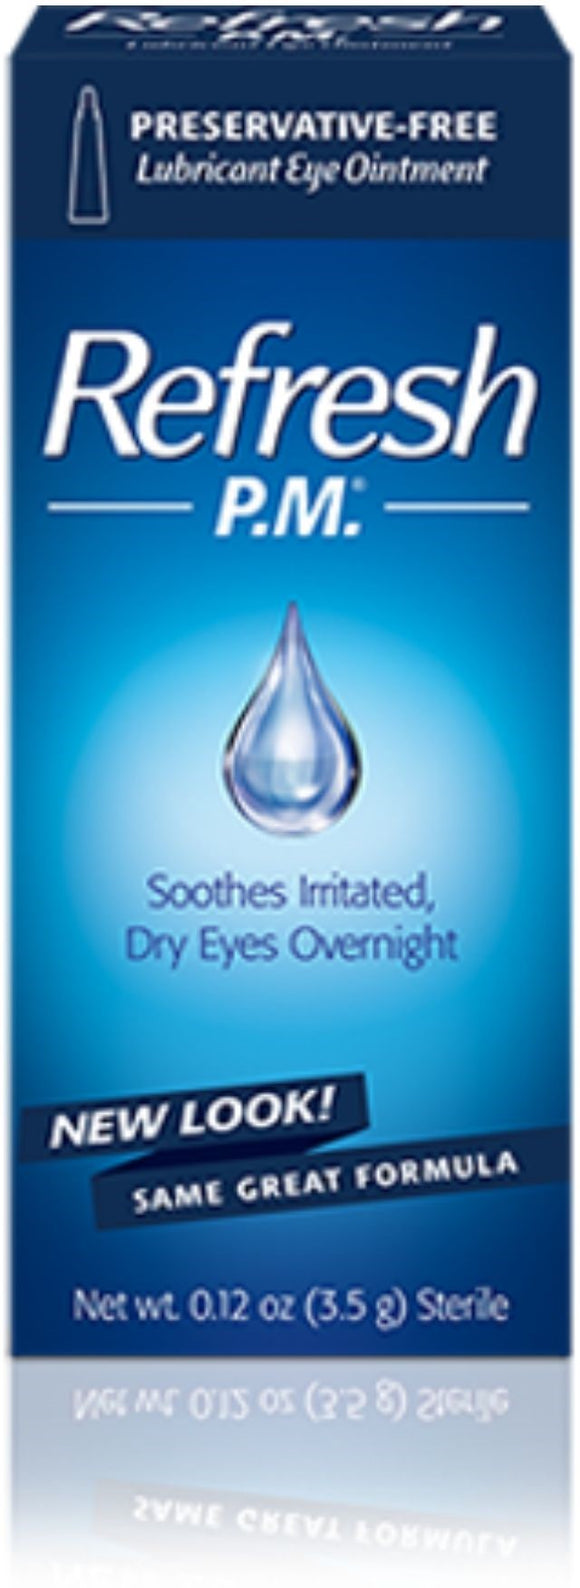 Refresh Brand P.M. Lubricant Eye Ointment, Soothes Lrritated, Dry Eyes Overnight ( 0.12 oz)  潤滑劑眼藥膏, 舒緩眼淚，過夜乾眼 (3.5g)